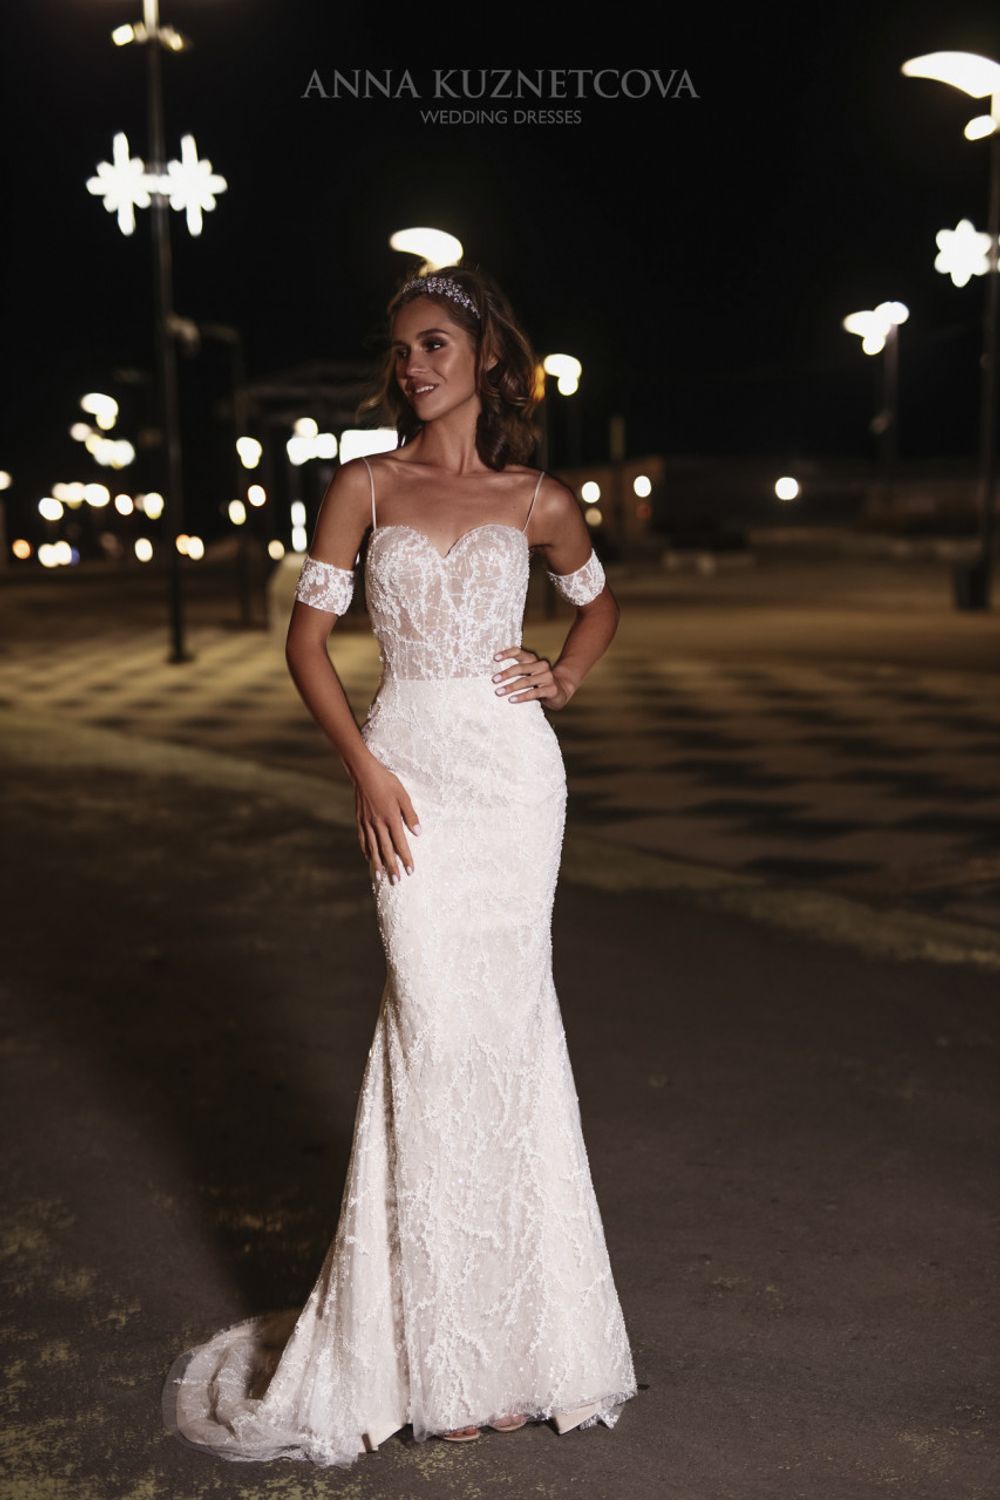 Свадебное платье от бренда Anna Kuznetcova 'Абу Даби' кружевное